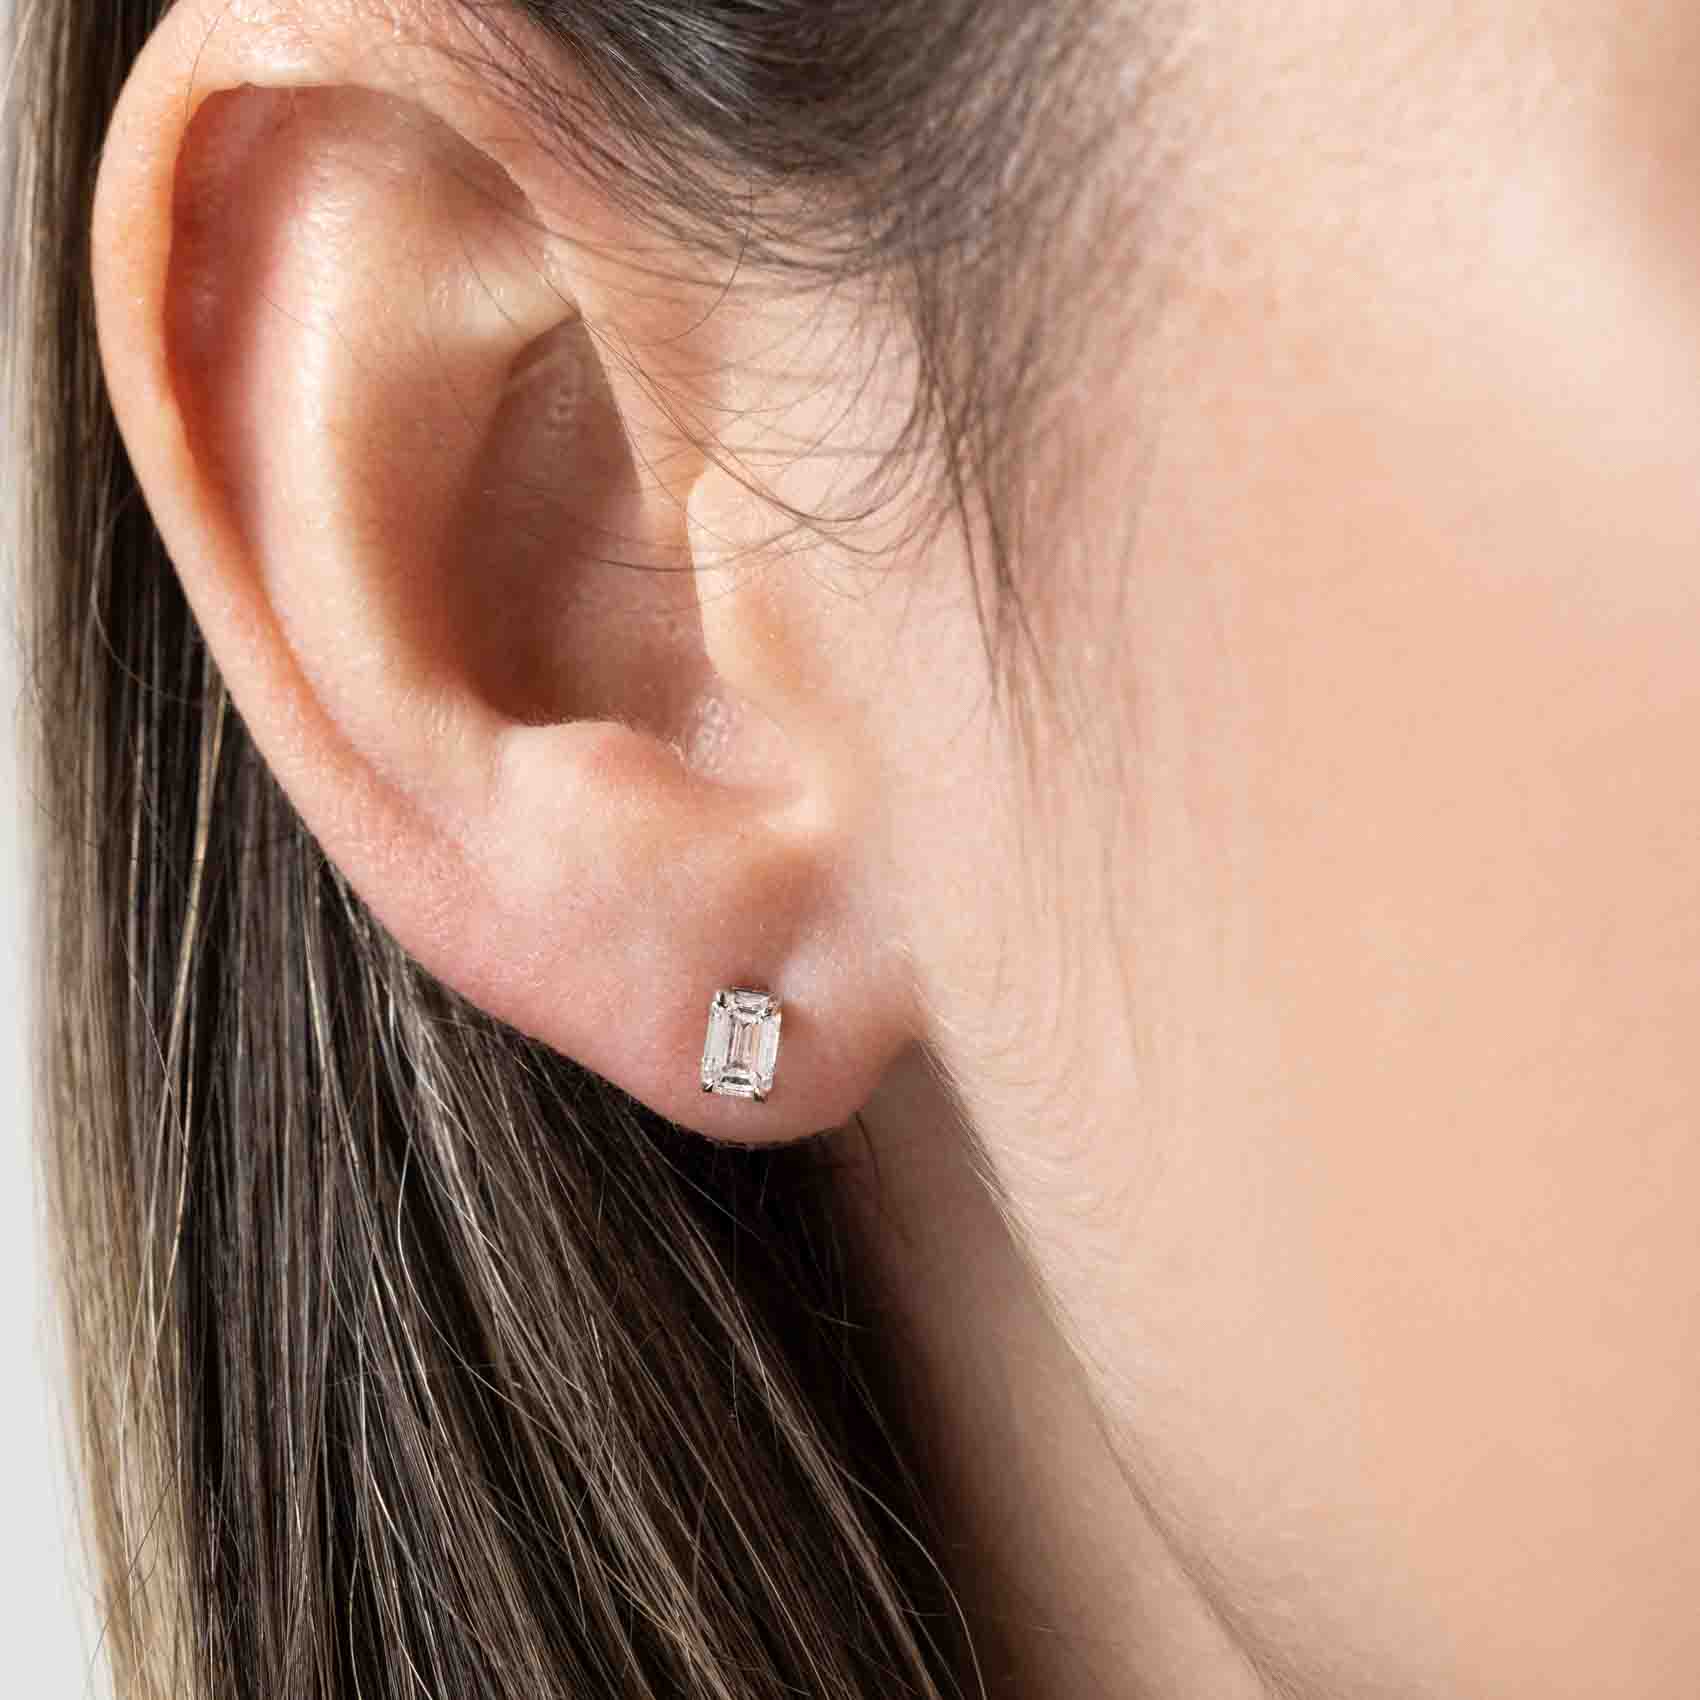 Emerald Cut Lab Grown Diamond Basket Stud Earrings Shown in 14K White Gold| emerald cut basket stud earrings with lab grown diamonds set in 14k white gold metal